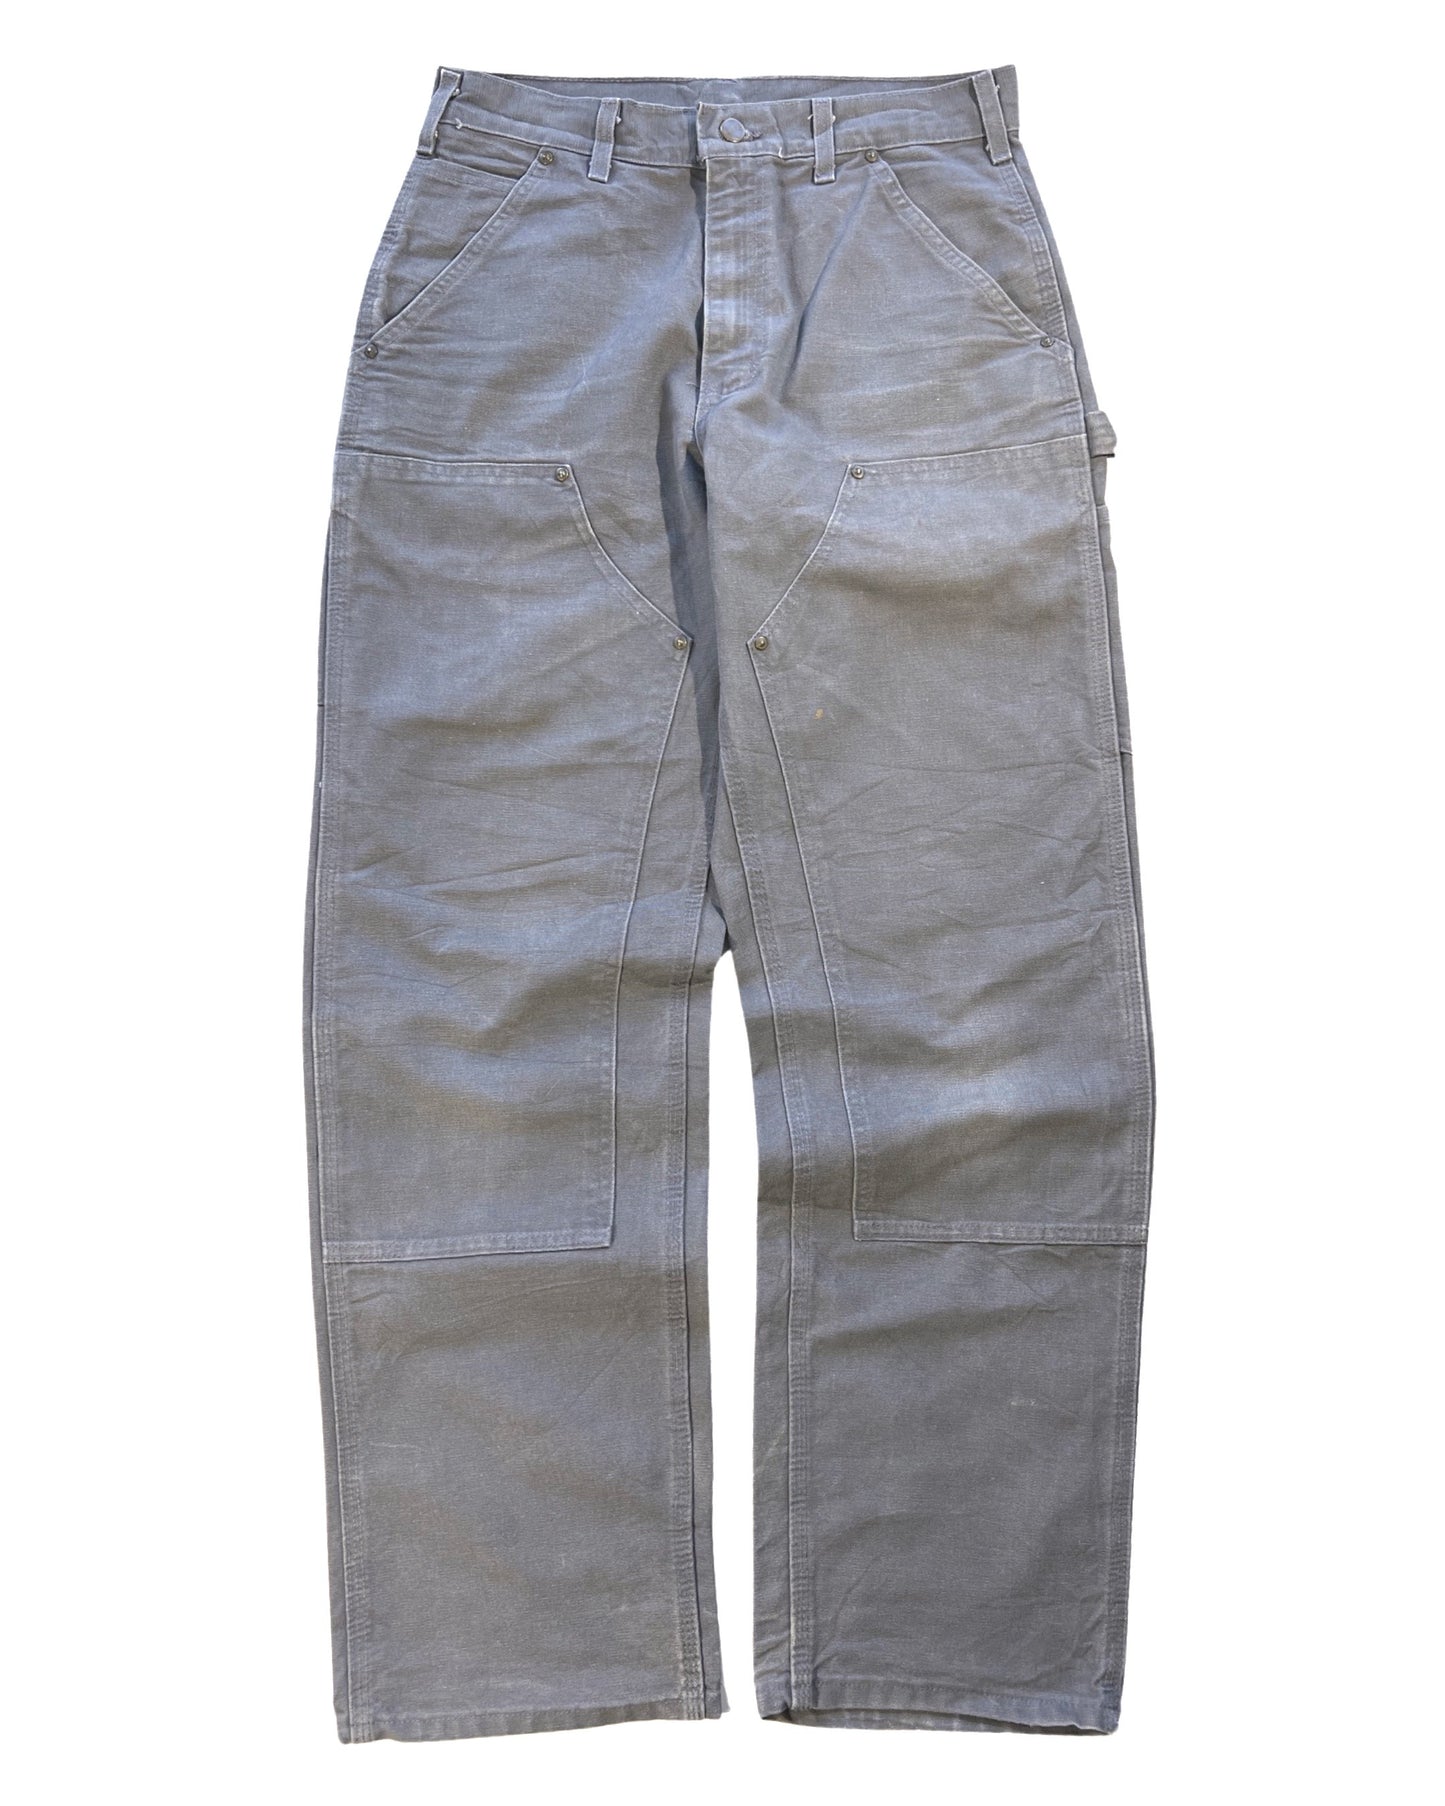 Vintage Carhartt Double Knee Jeans - W 30"